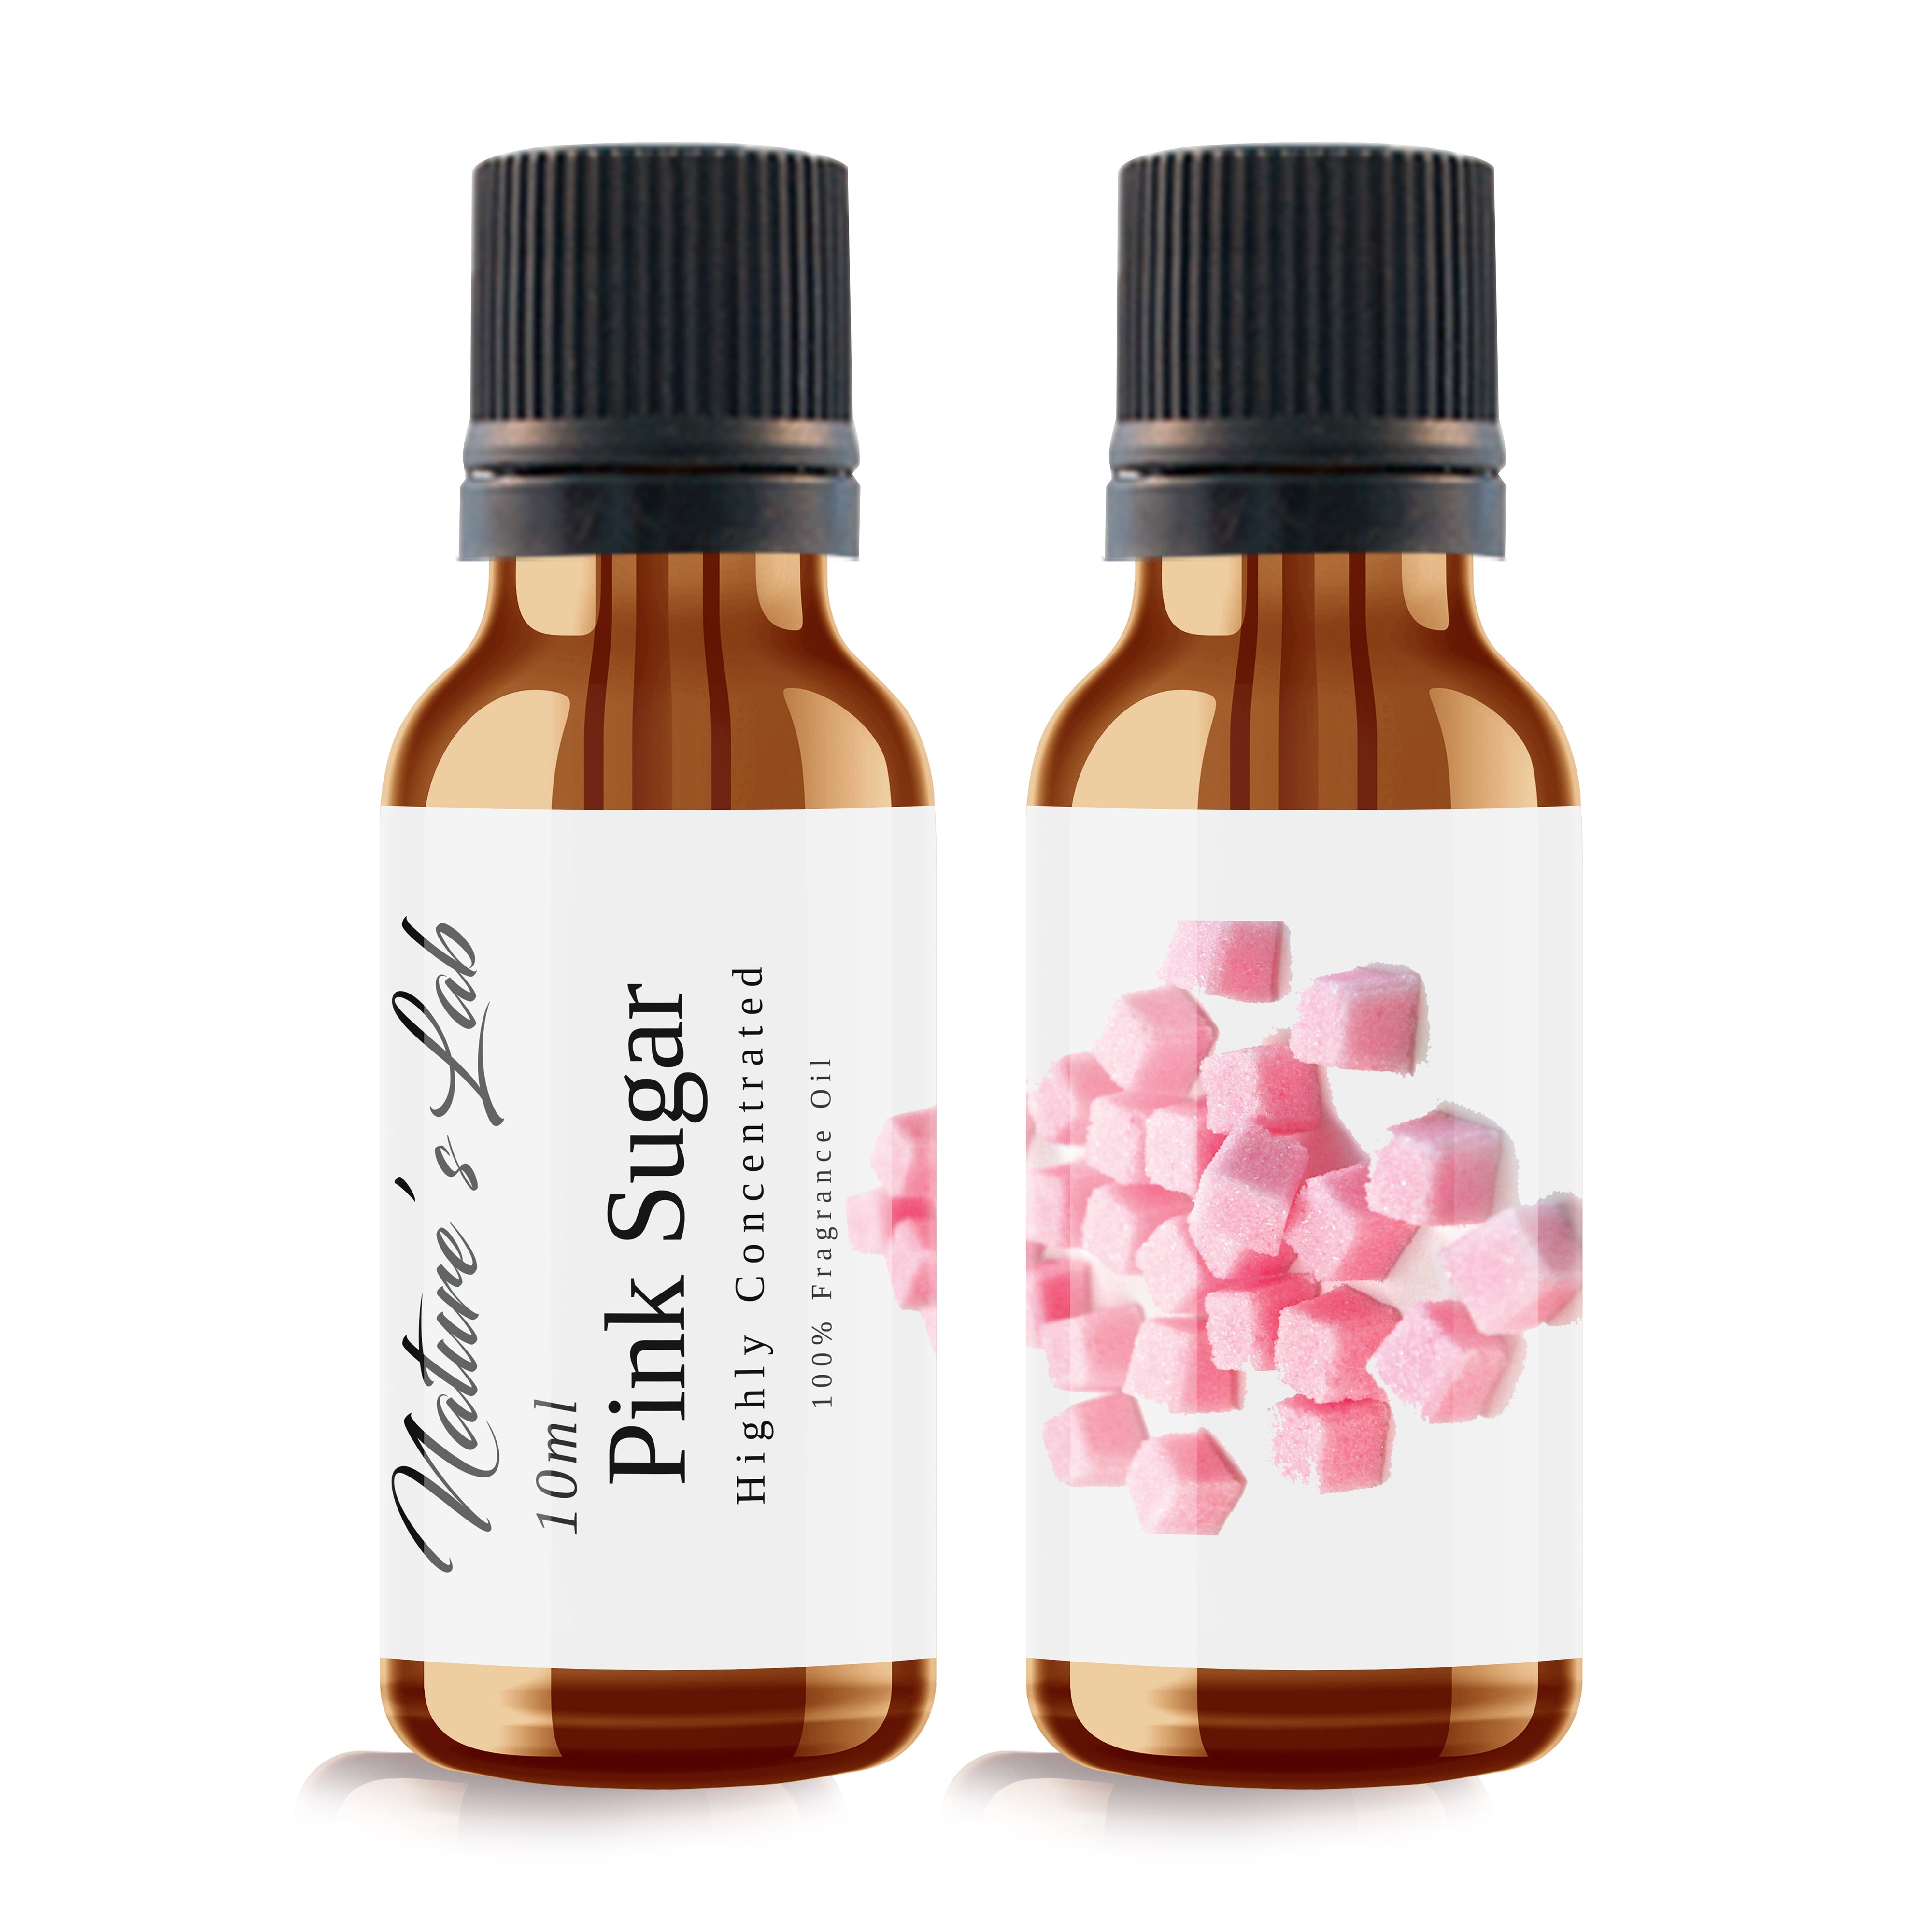 Sweet Pink Sugar Fragrance Oil